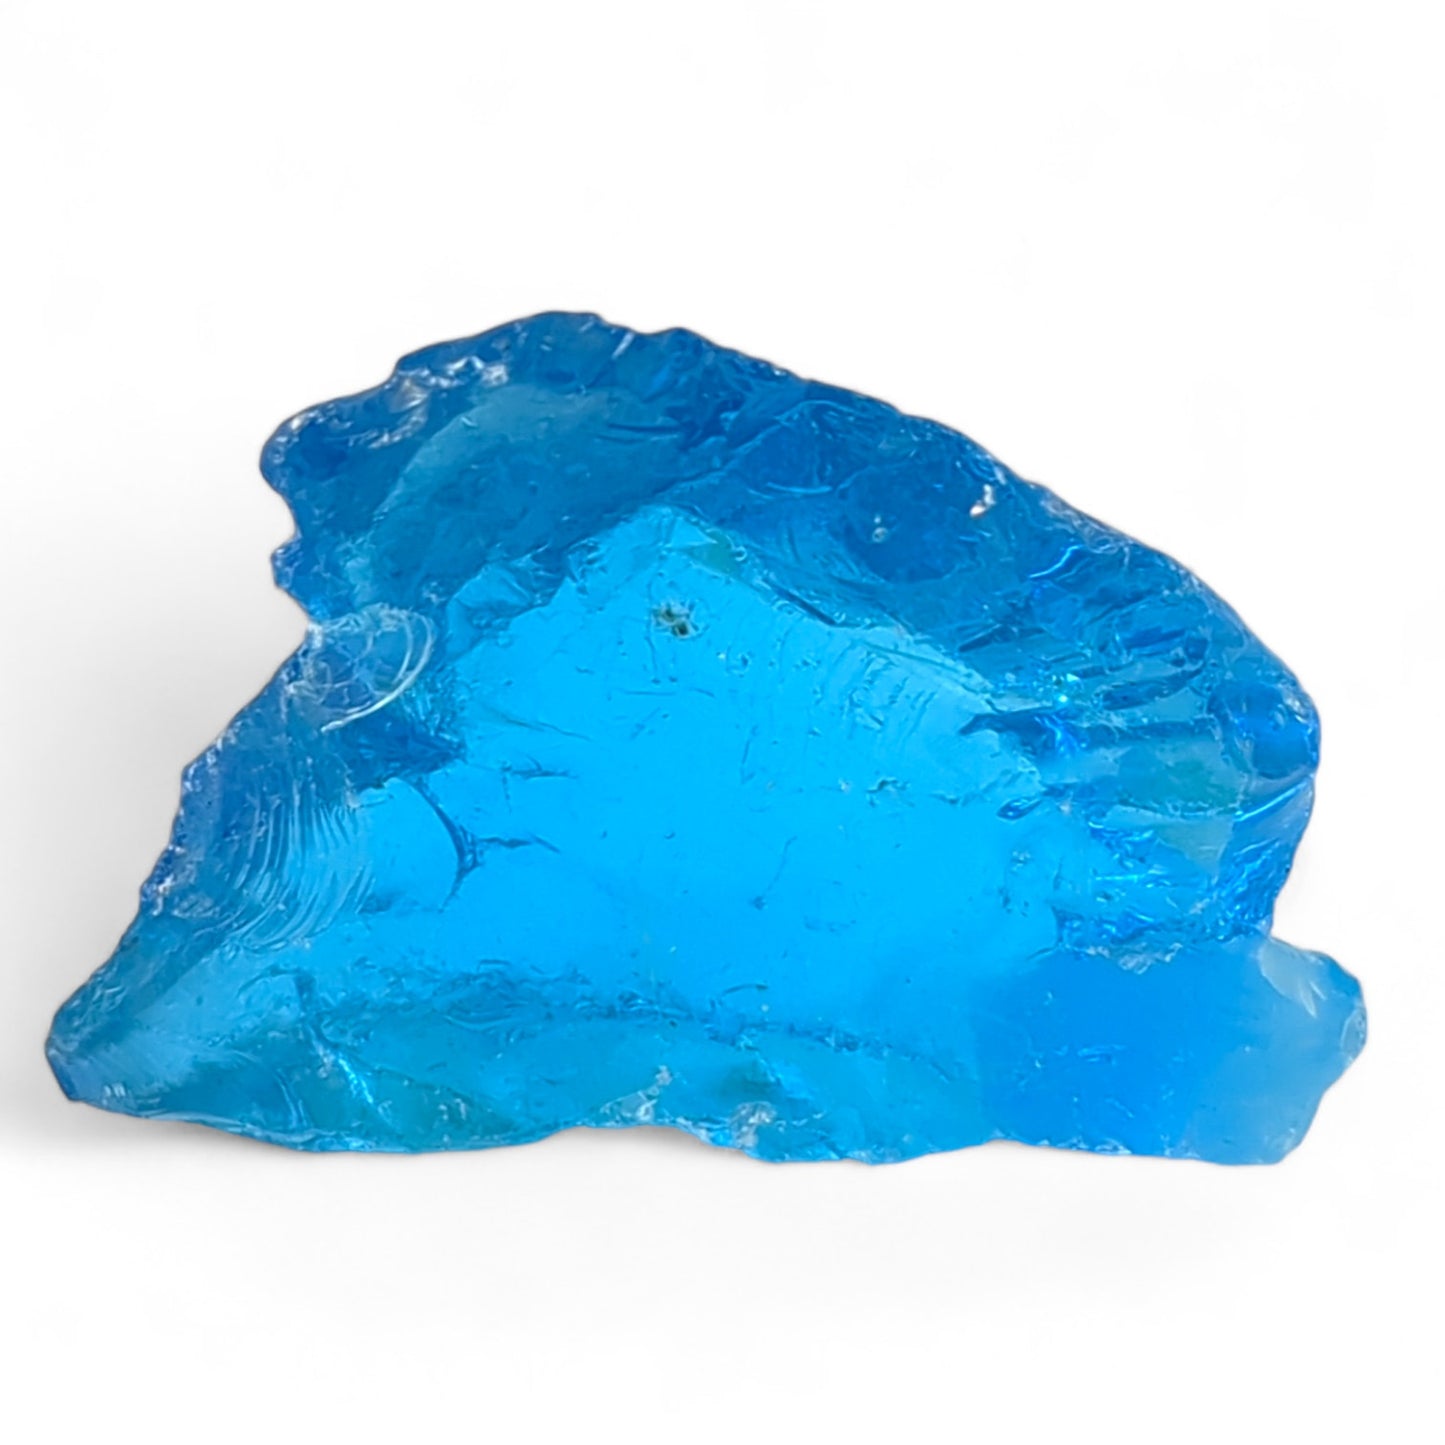 Satin Blue Art Glass Cullet Glowing Translucent Manganese Slag Glass #4GM99